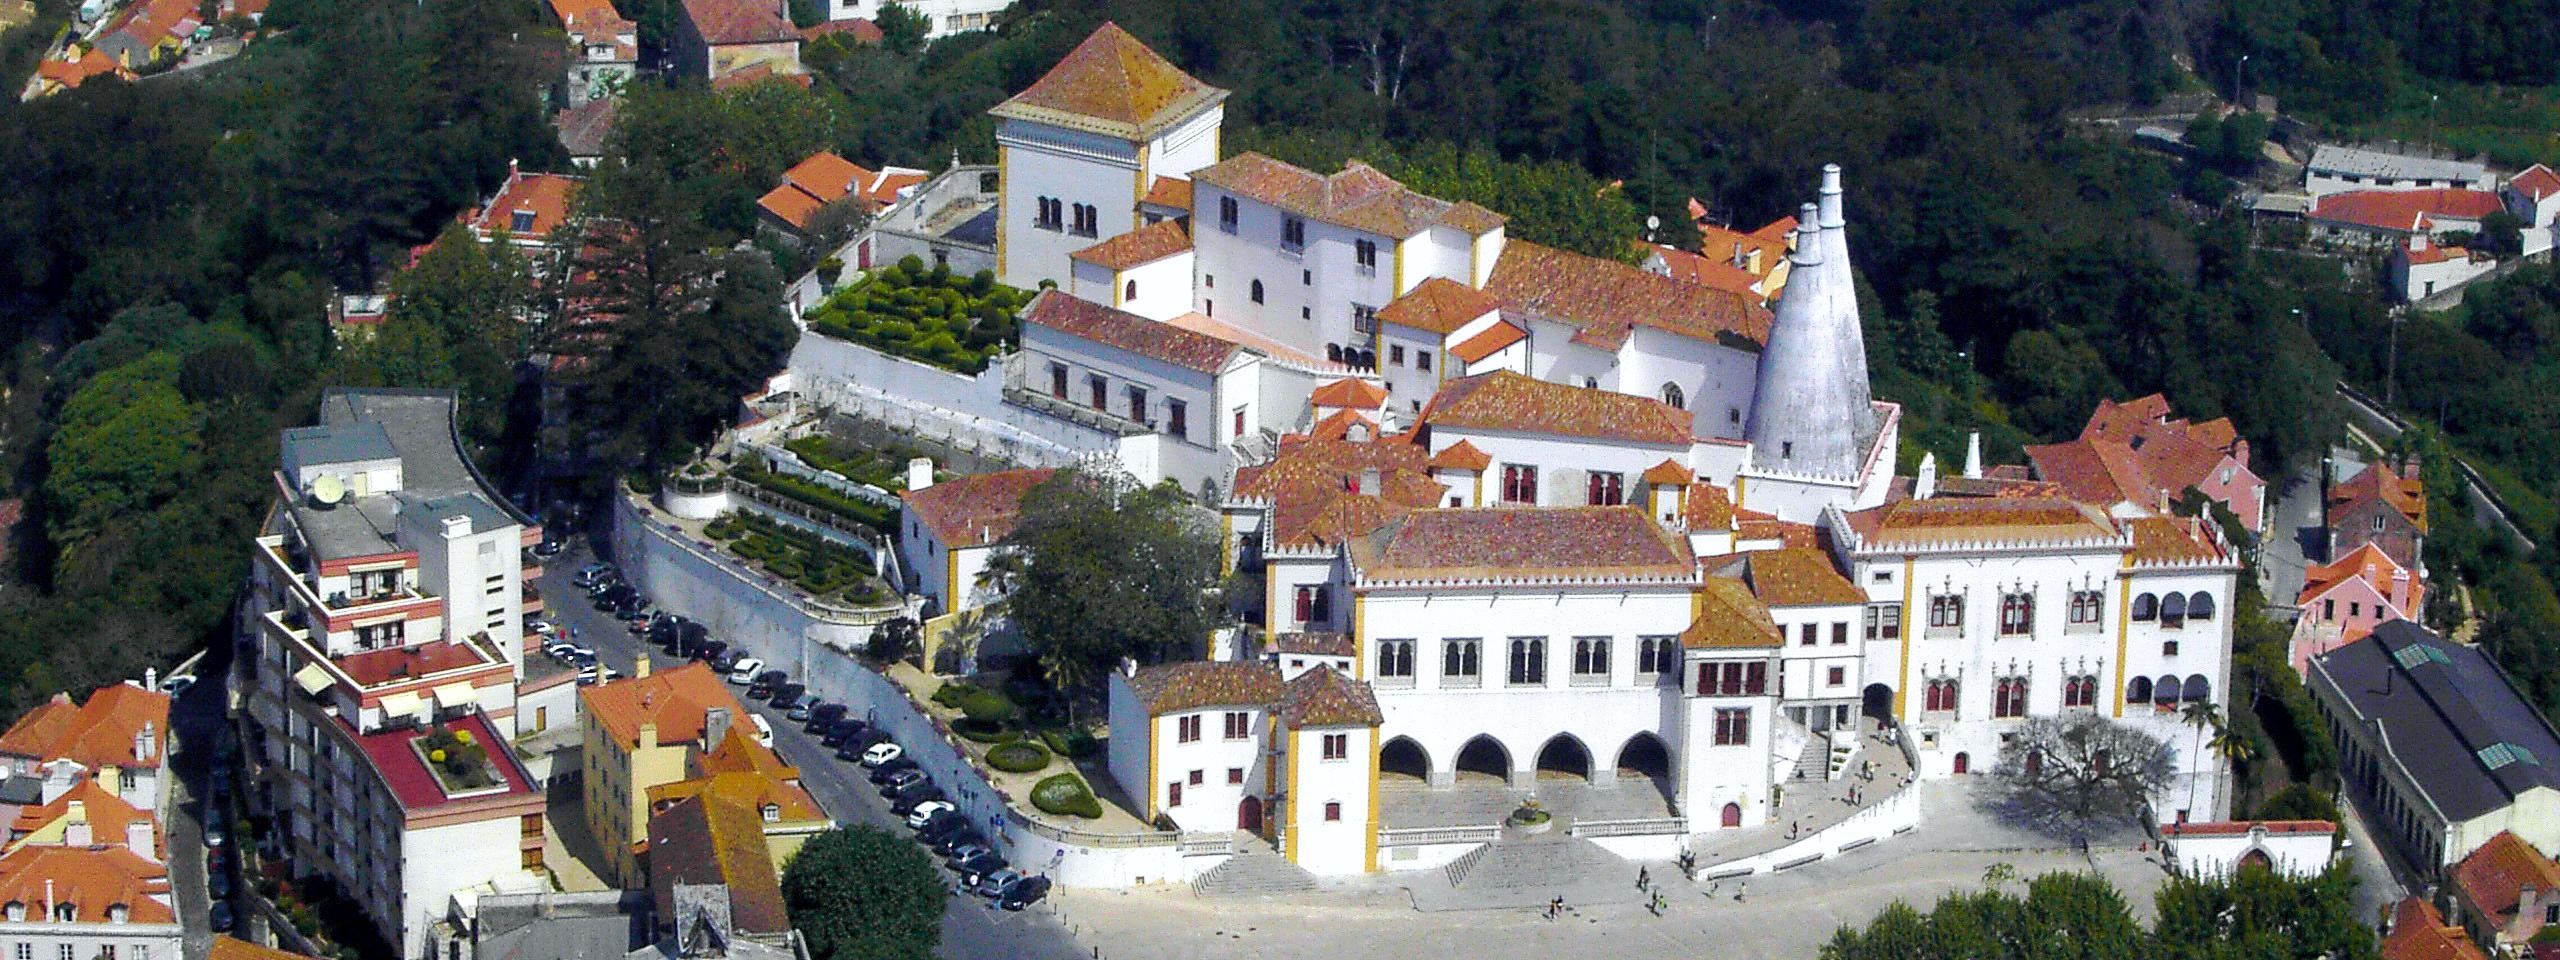 Palácio Nacional de Sintra visto a partir do Castelo dos Mouros